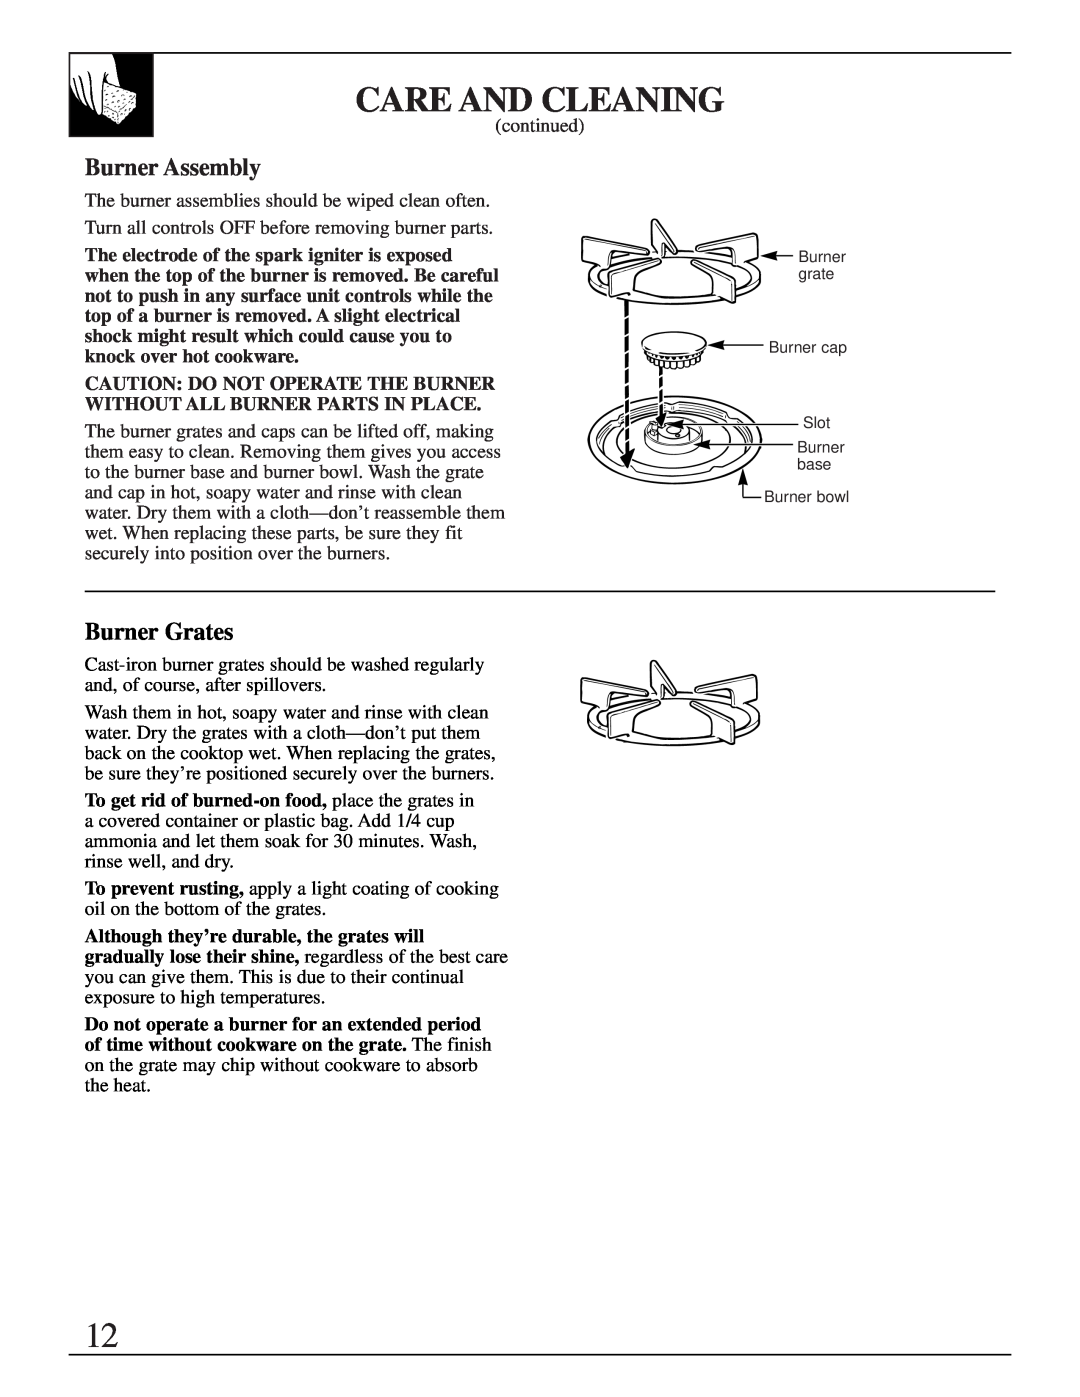 GE Monogram JGP645 operating instructions Burner Assembly, Burner Grates, Care And Cleaning 